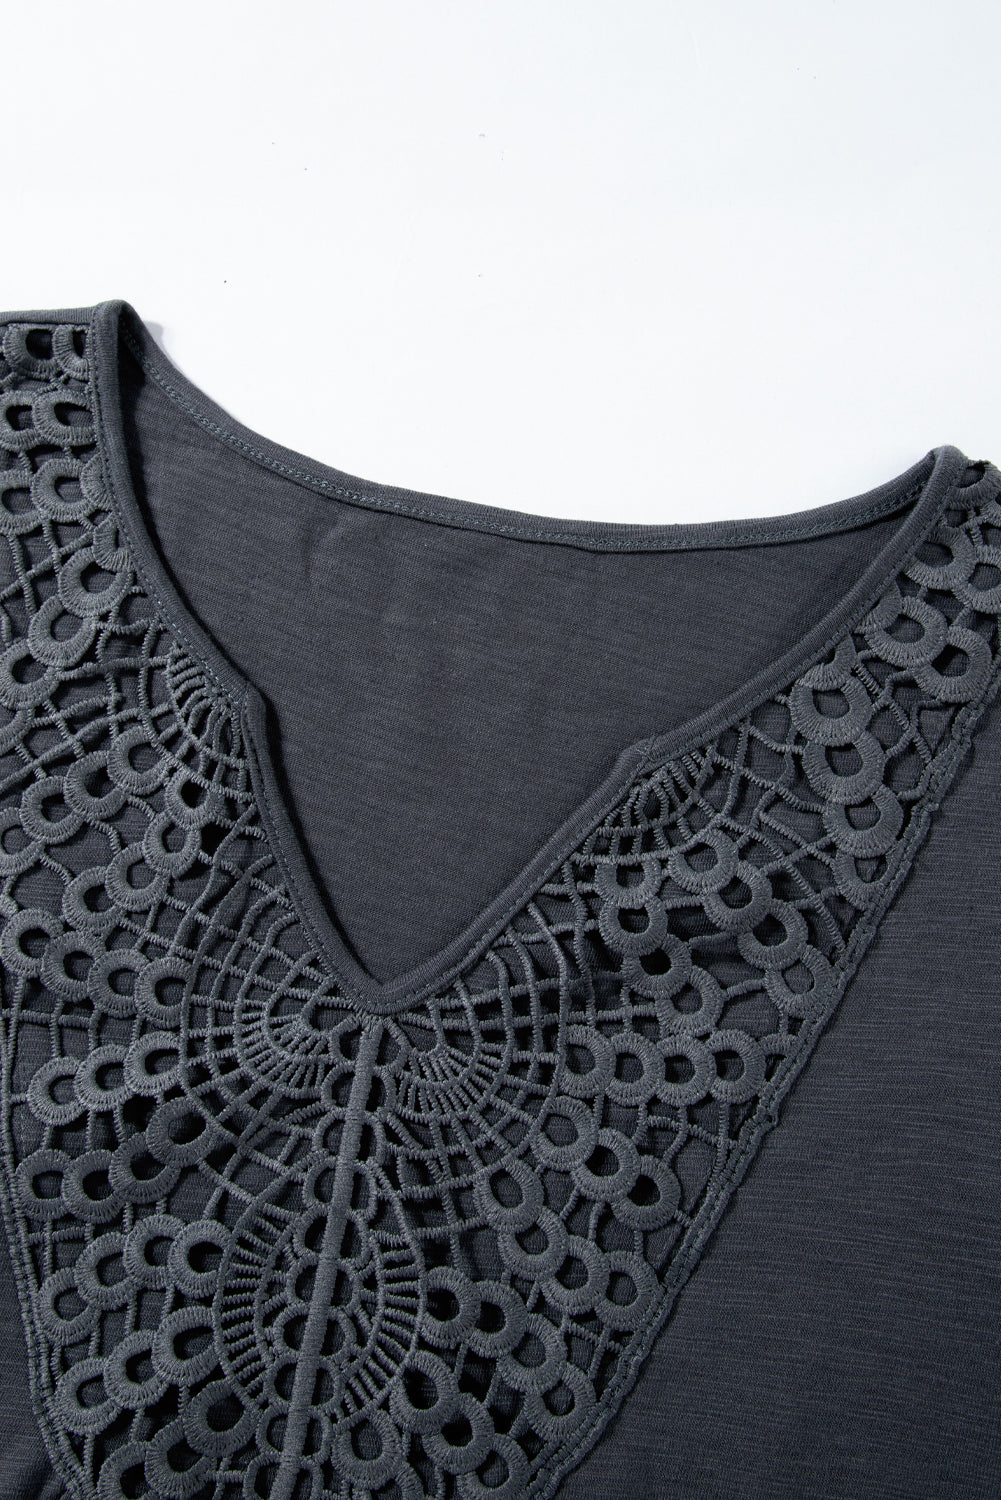 Gray Lace Crochet Patchwork V Neck T Shirt